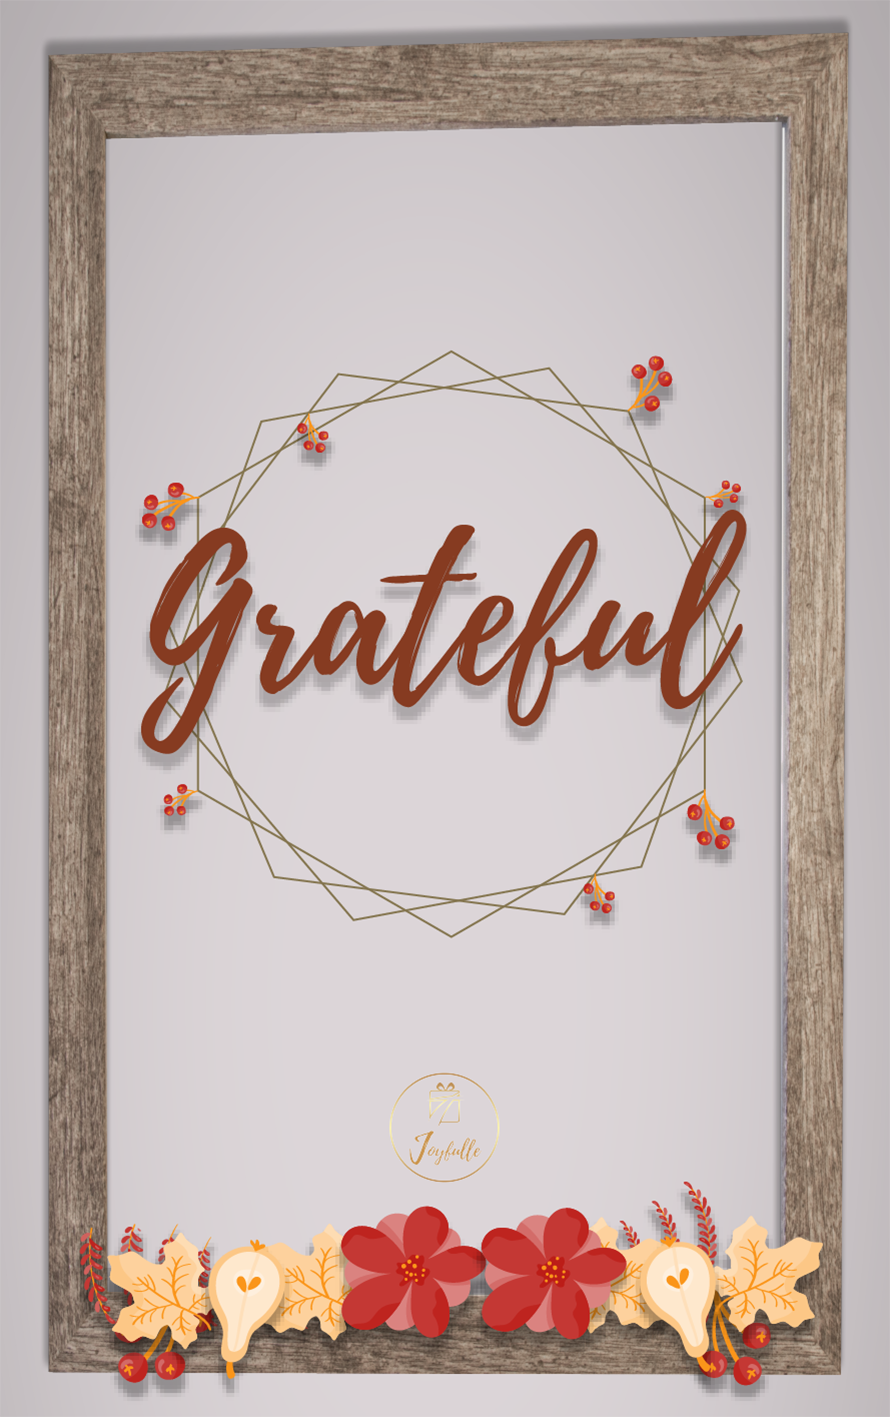 Thanksgiving Day Greeting Card 06